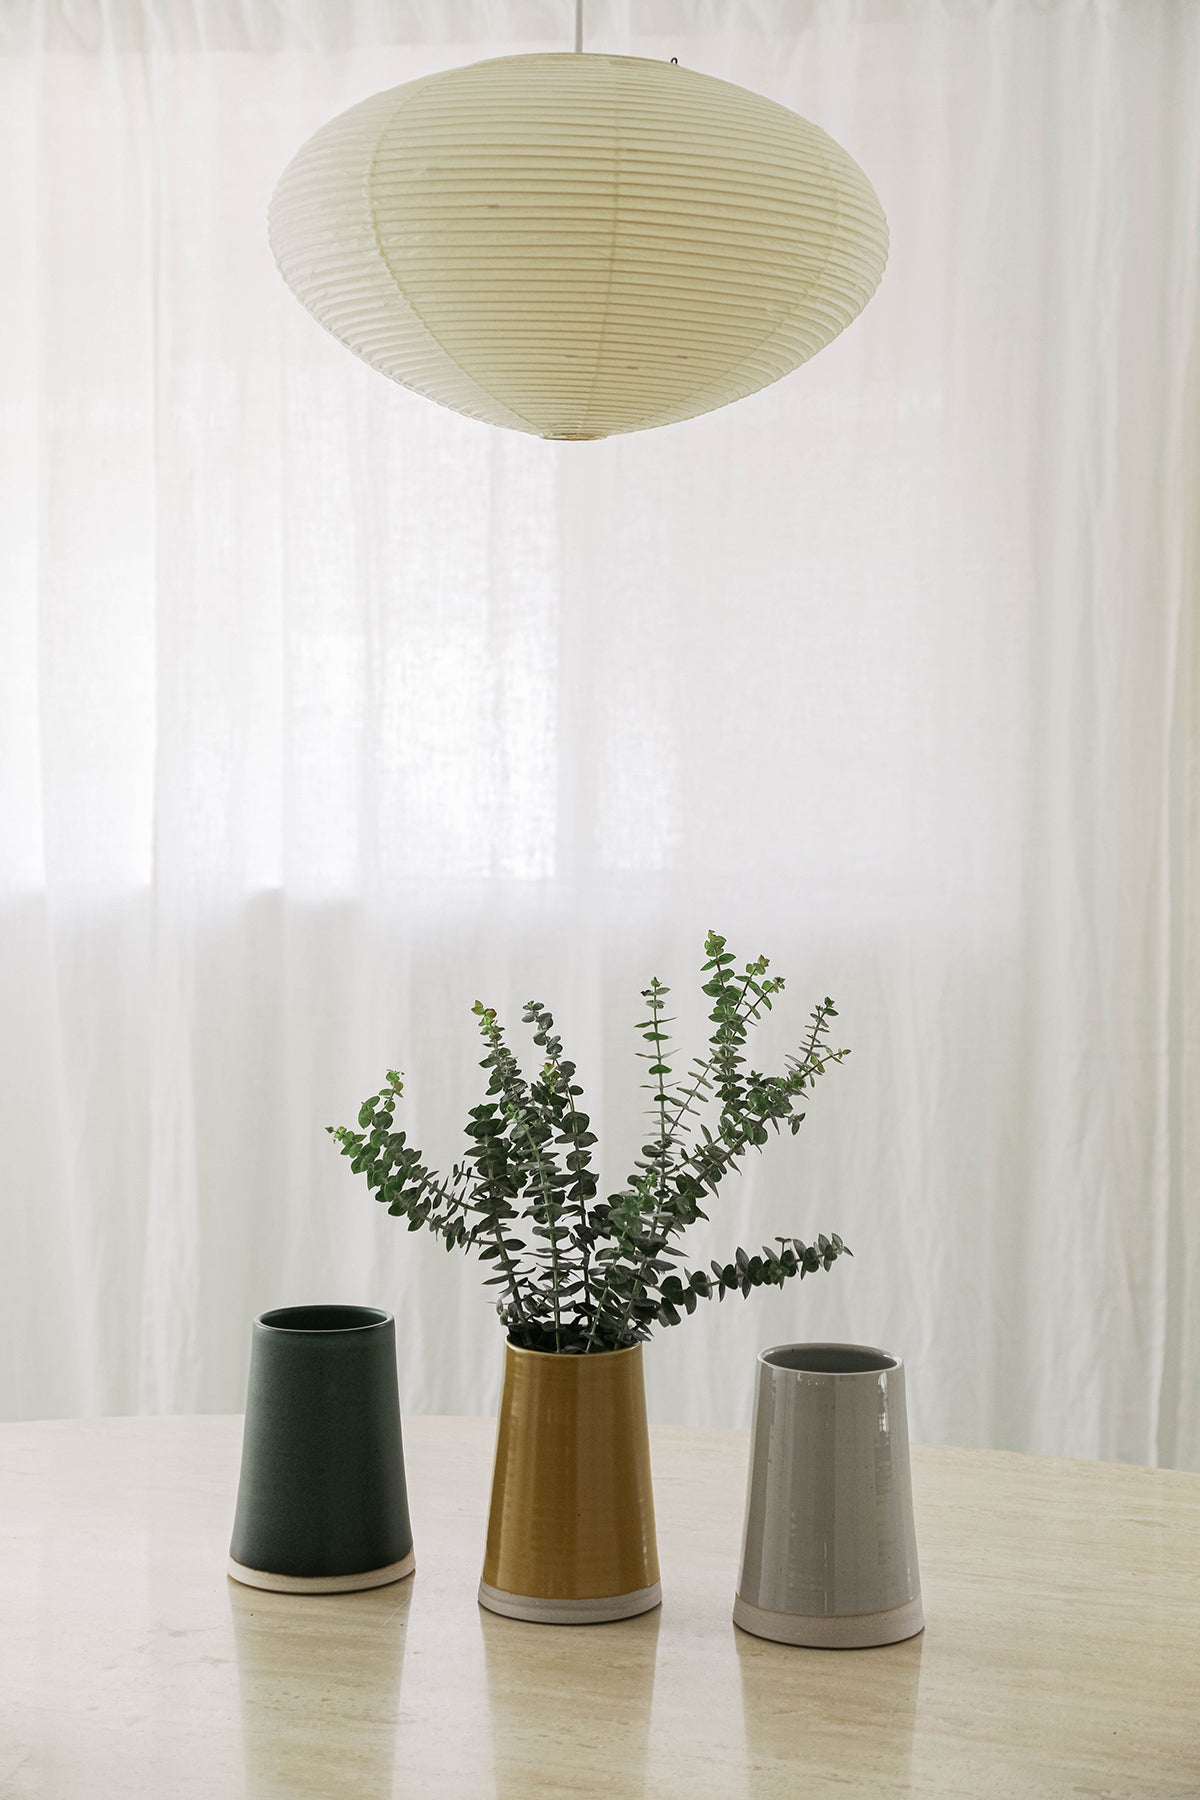 Jenny Graham Ceramic Large Vases in Wreath, Mustard, and Mist-23604853801153